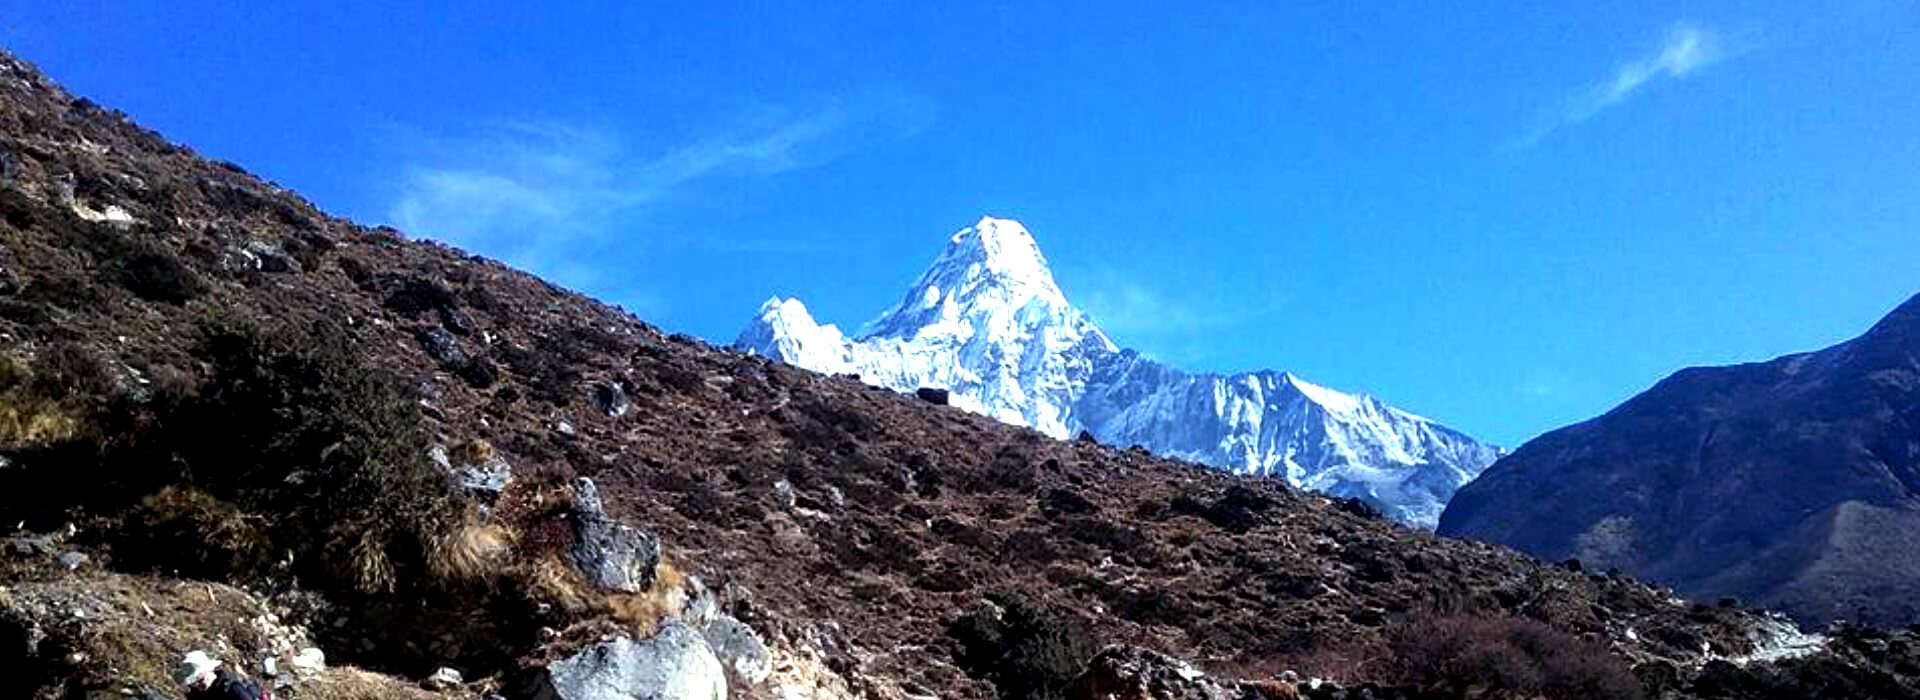 Everest Base Camp Trek -12 days